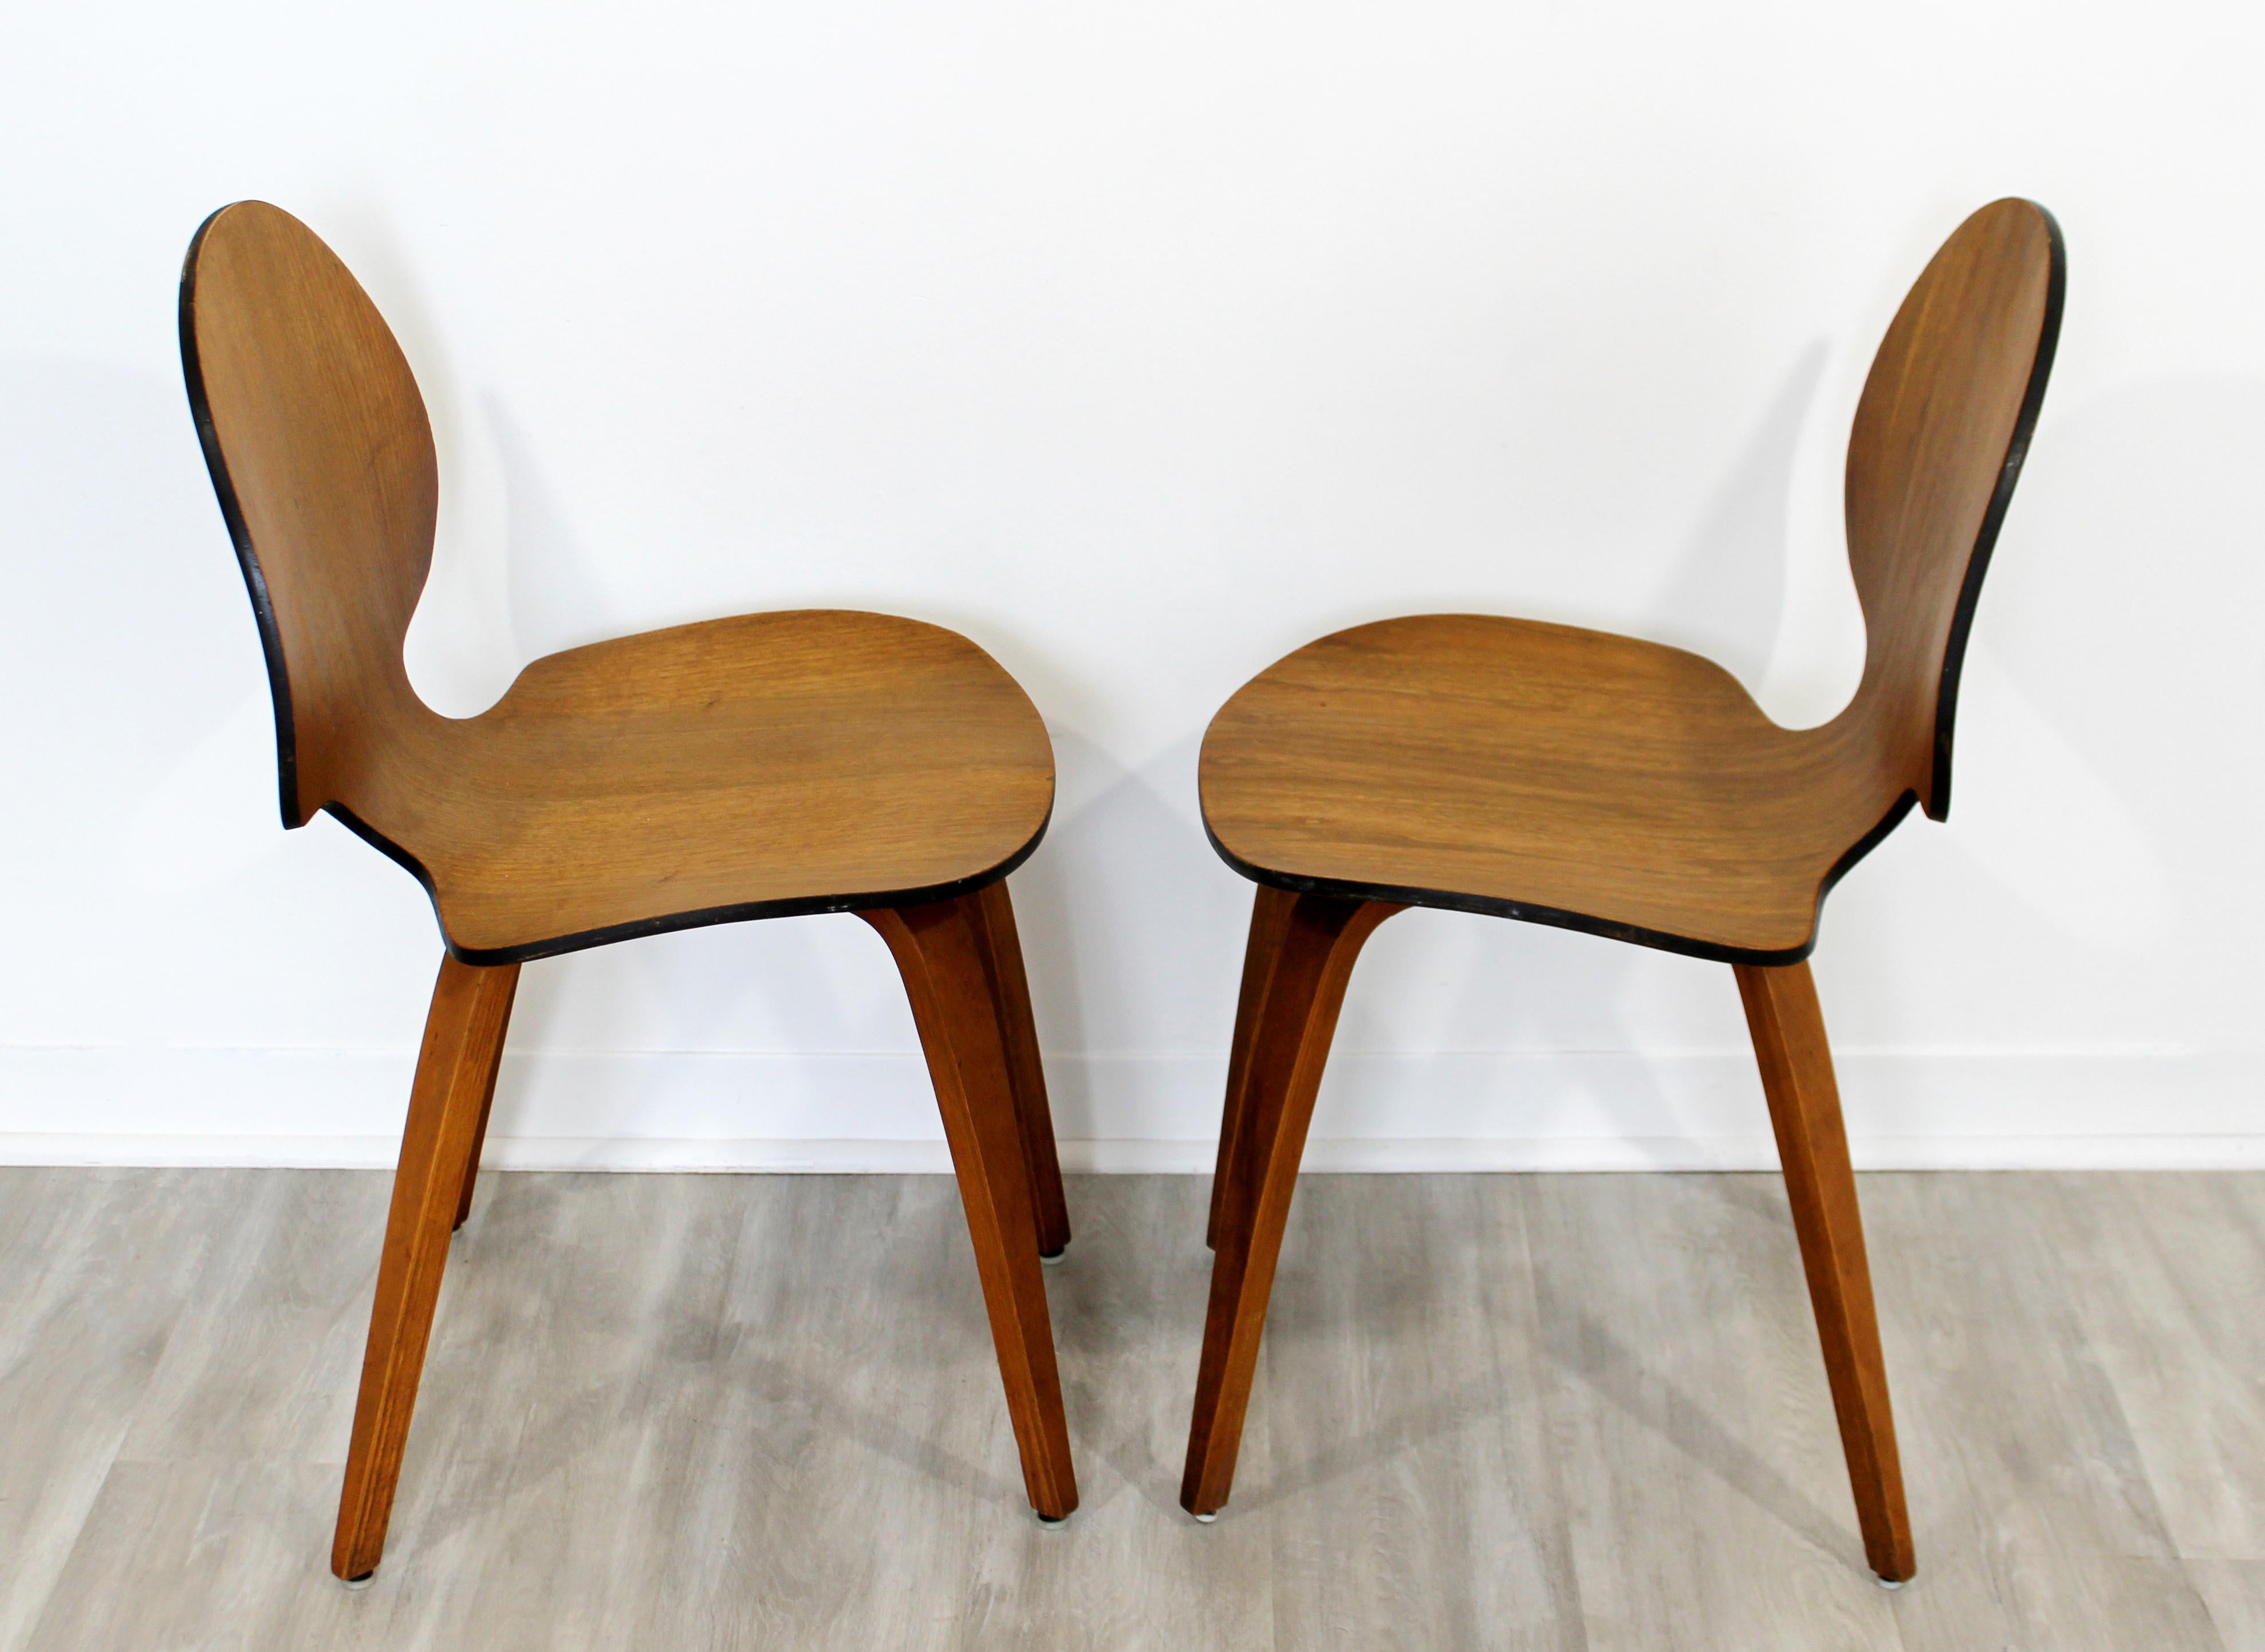 Scandinavian Mid-Century Modern Pair of Curved Bent Teak Wood Side Chairs Fritz Hansen Era